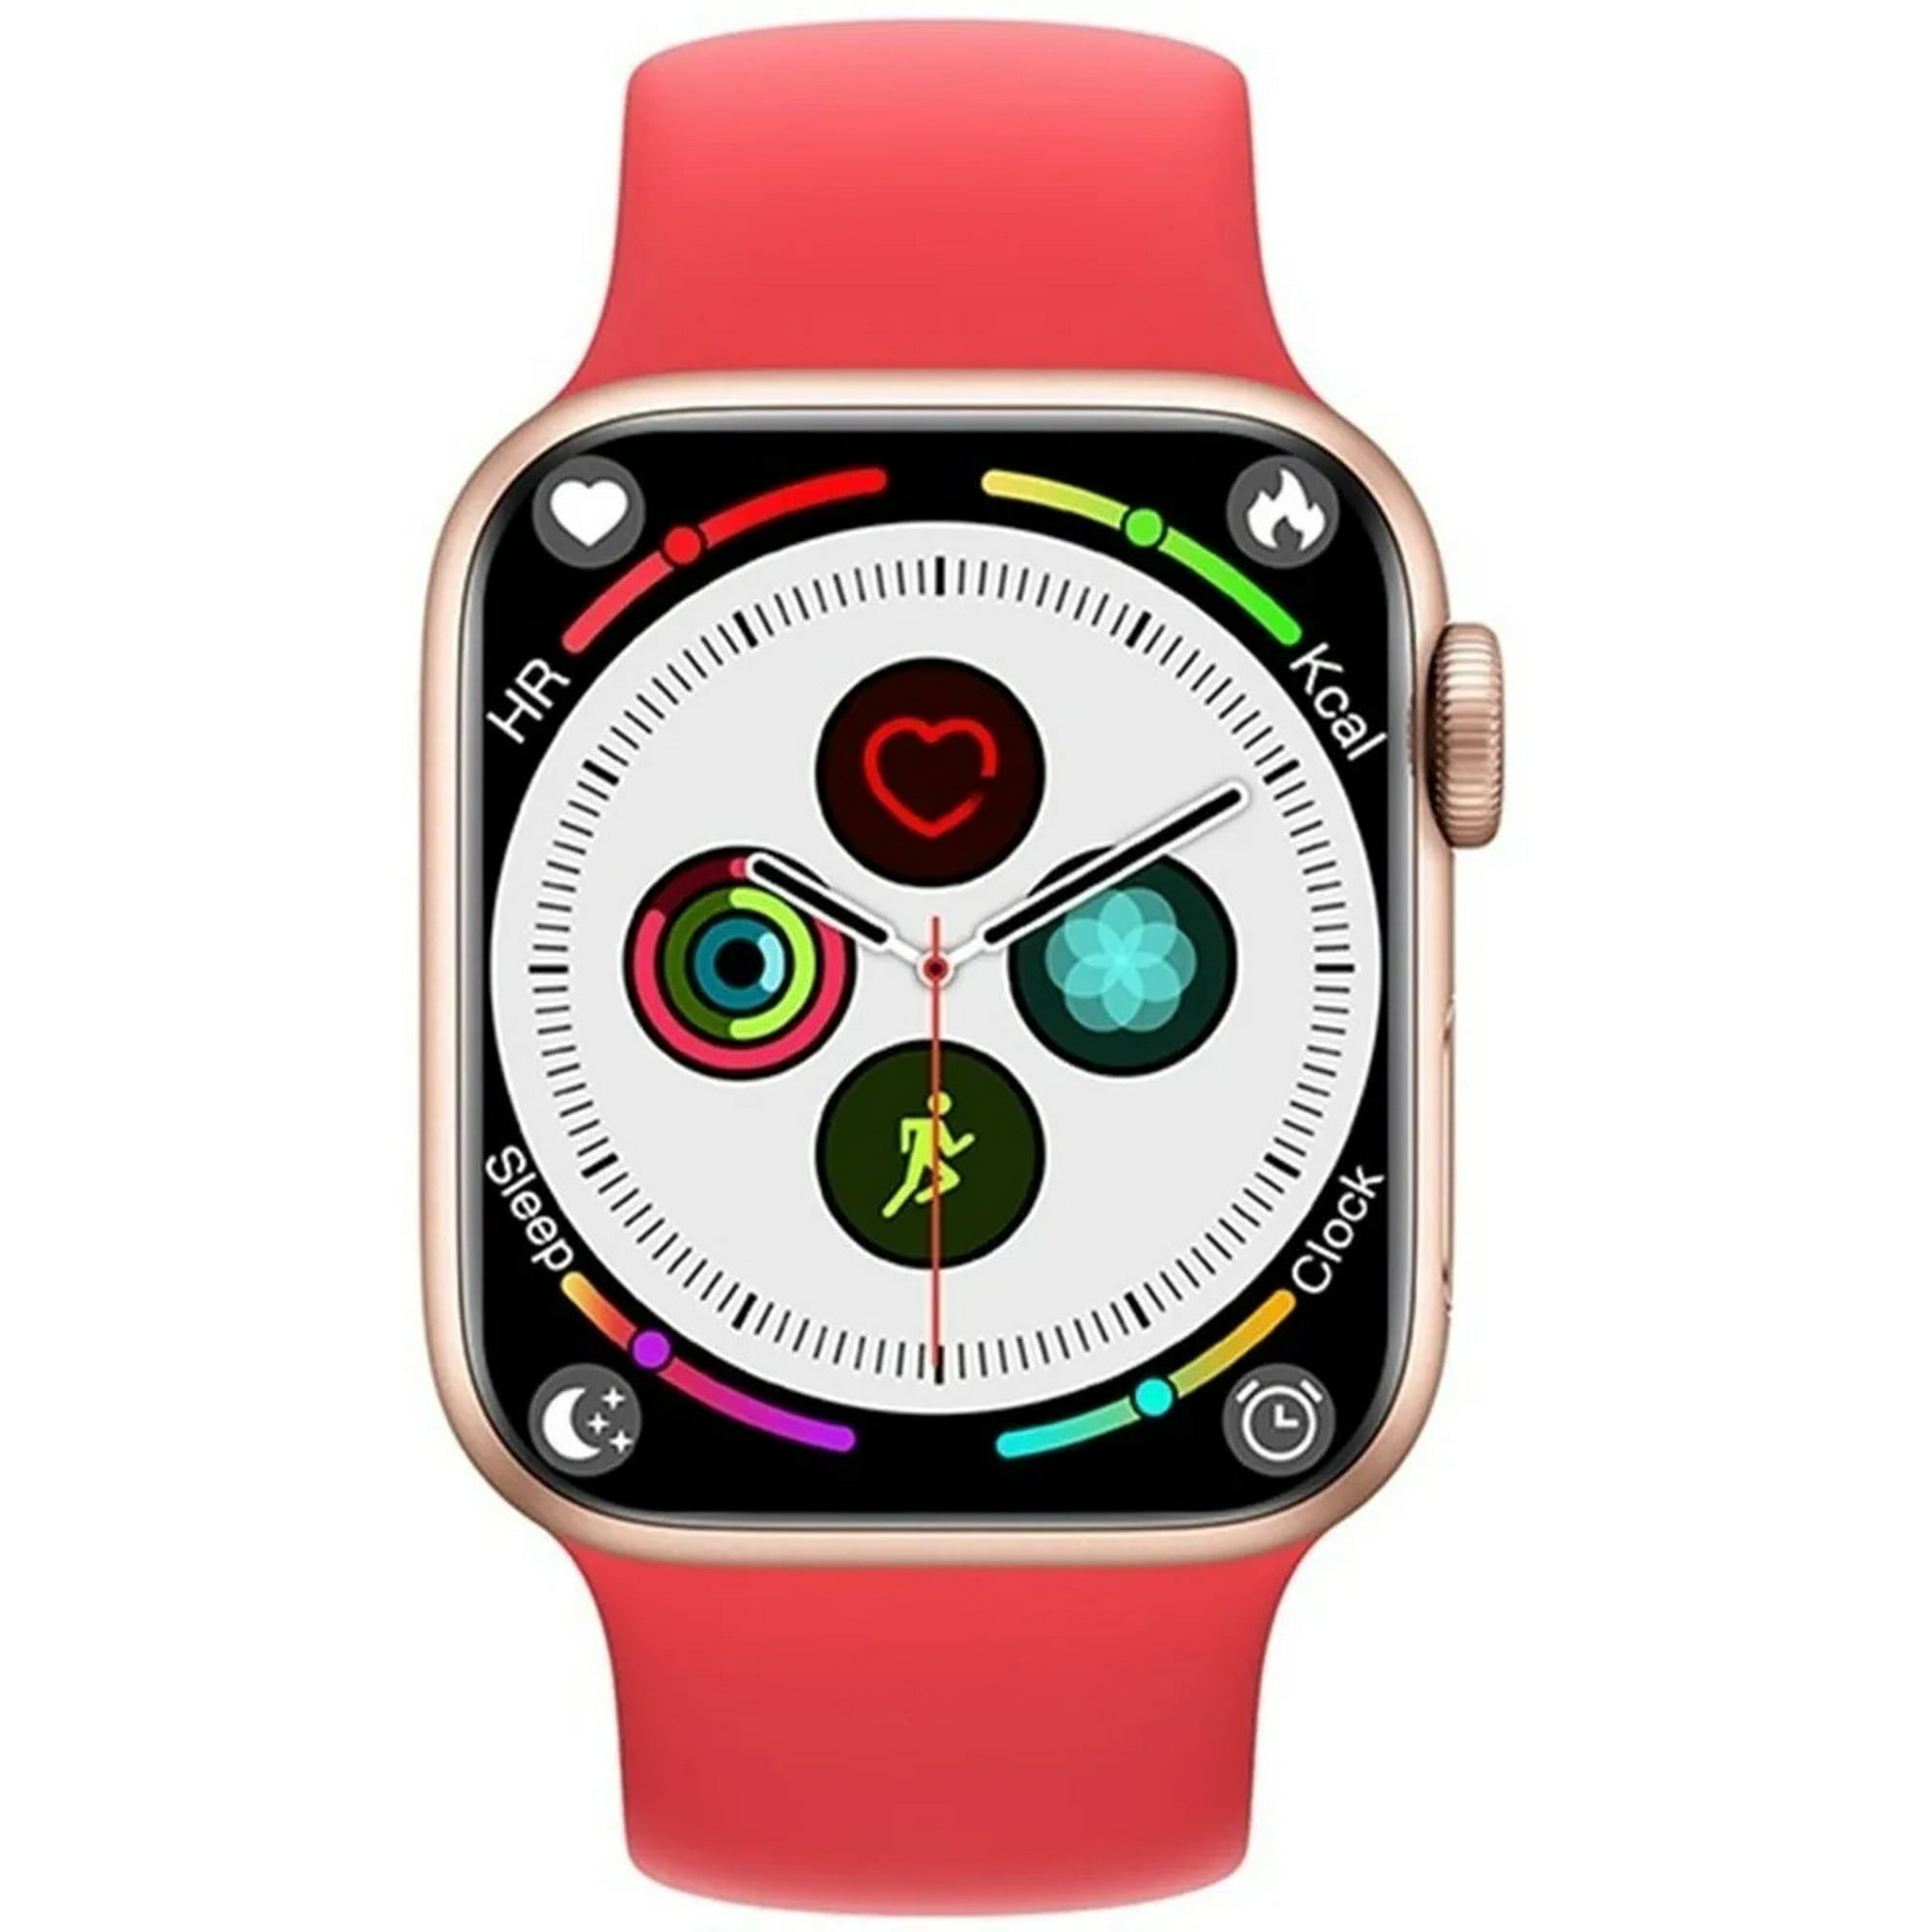 Fralugio smart watch reloj inteligente t700 pro max hd nfc rojo fralugio lujo